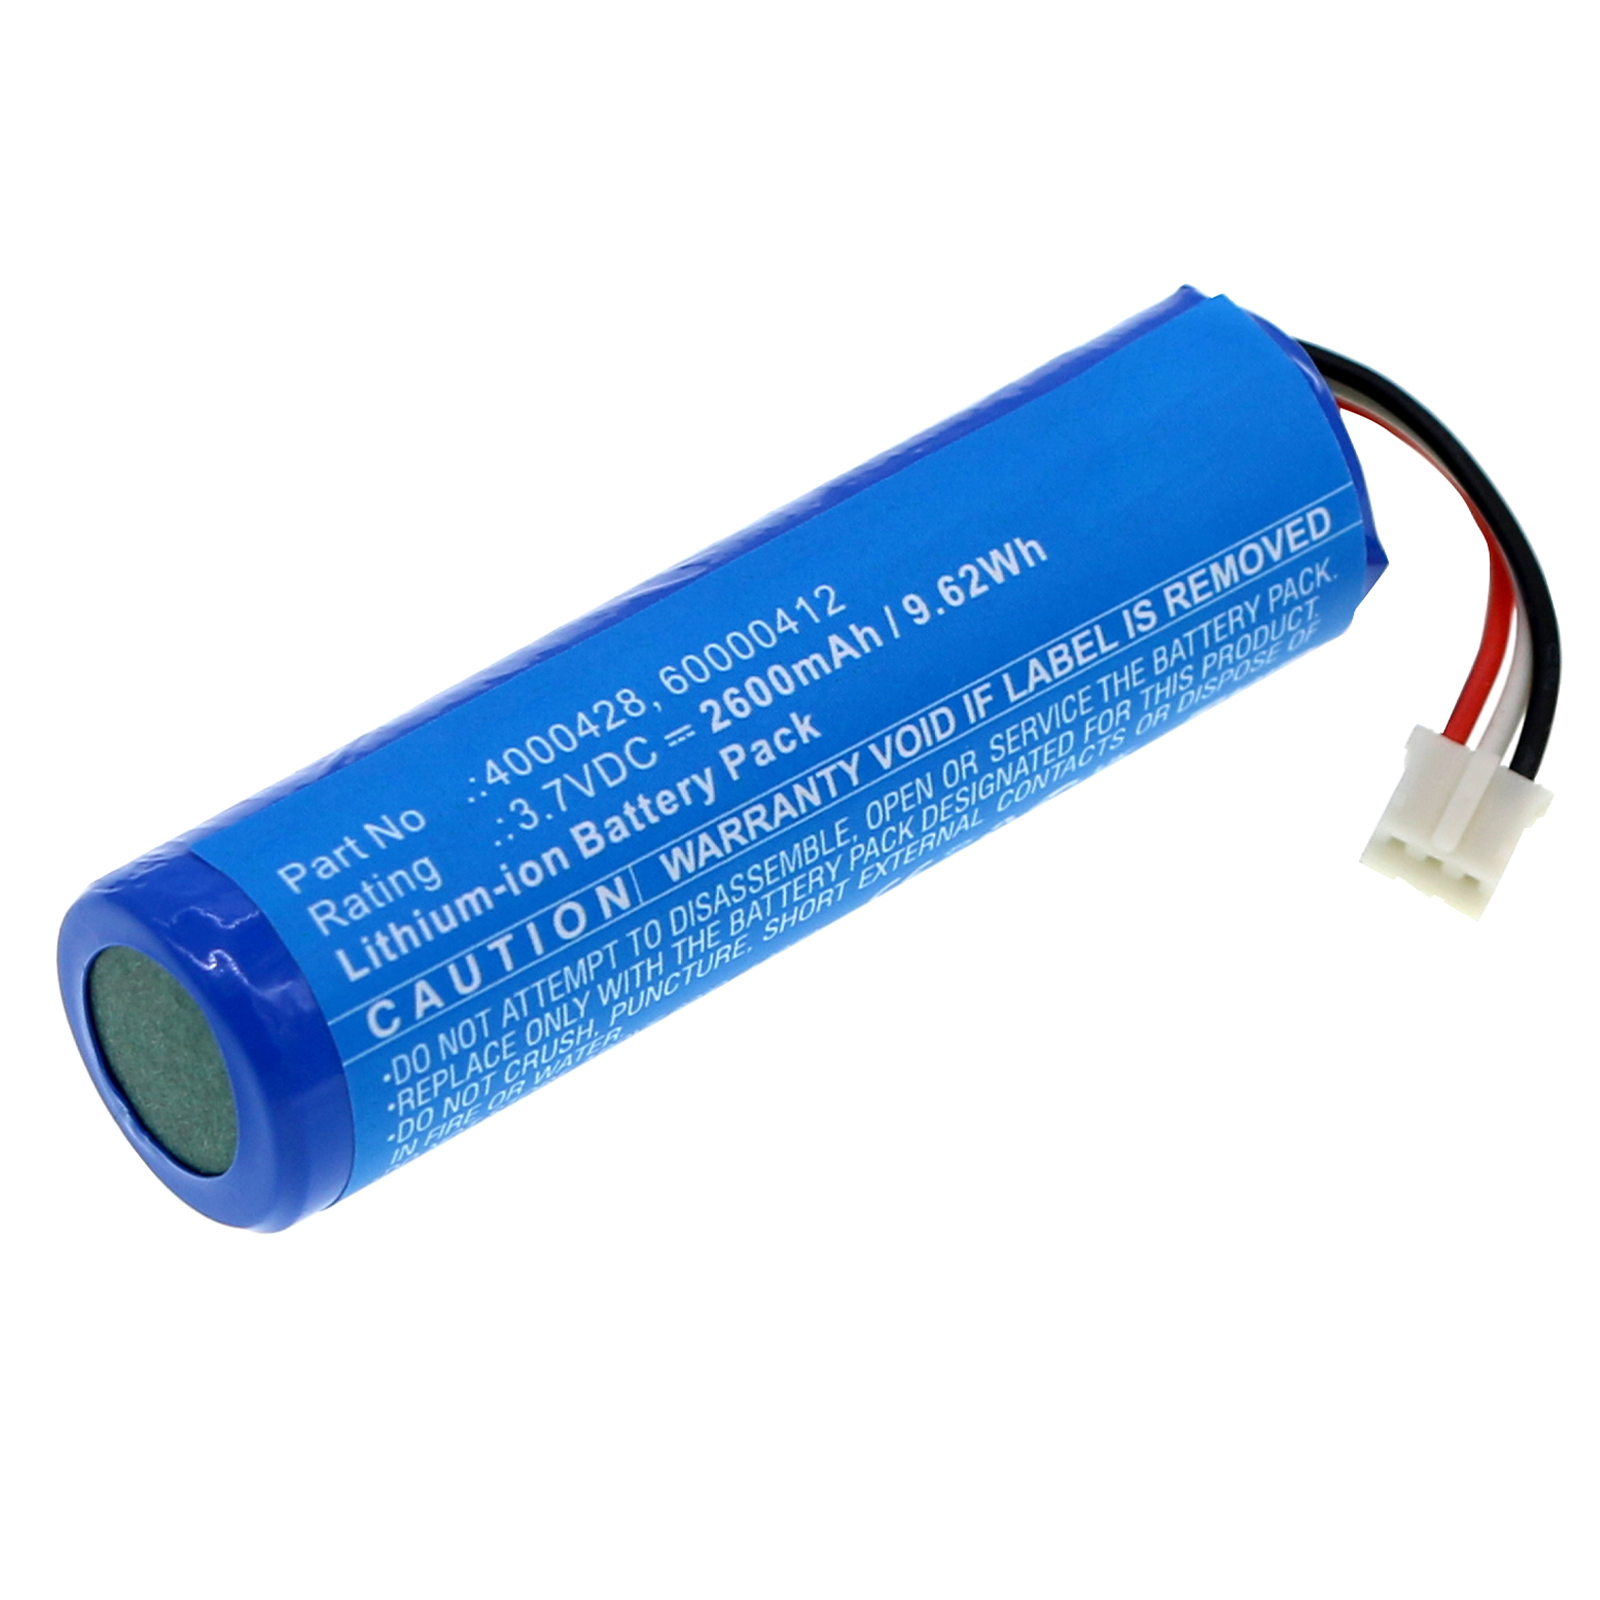 Batteries for BurtonElectronic Magnifier